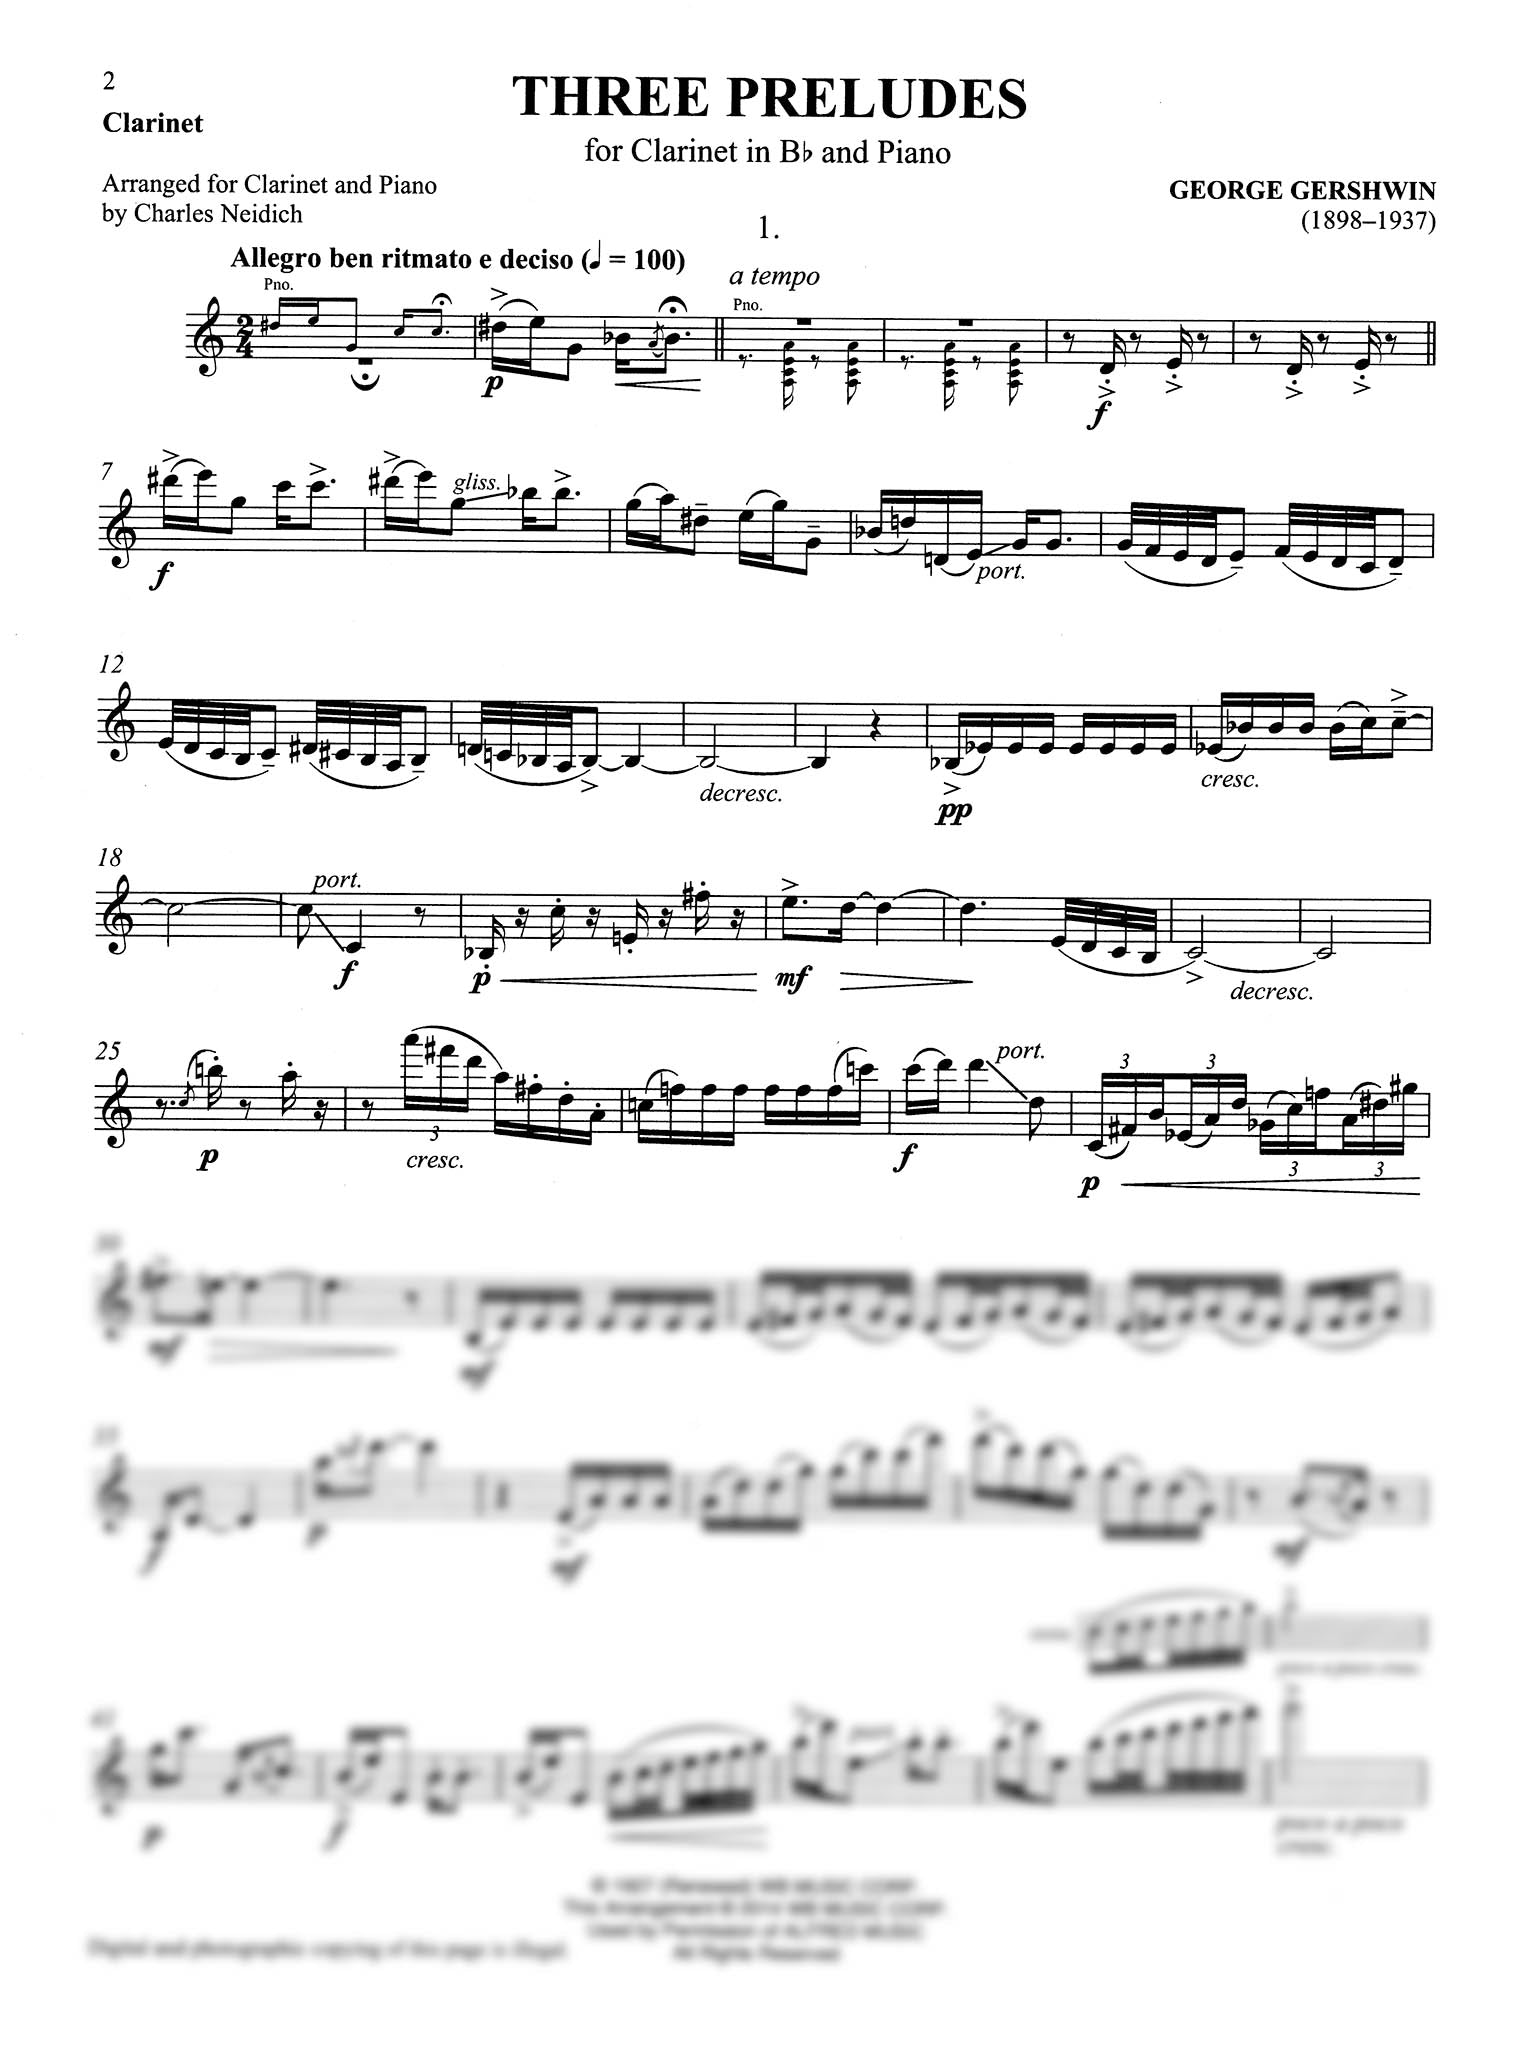 3 Preludes B-flat Clarinet part